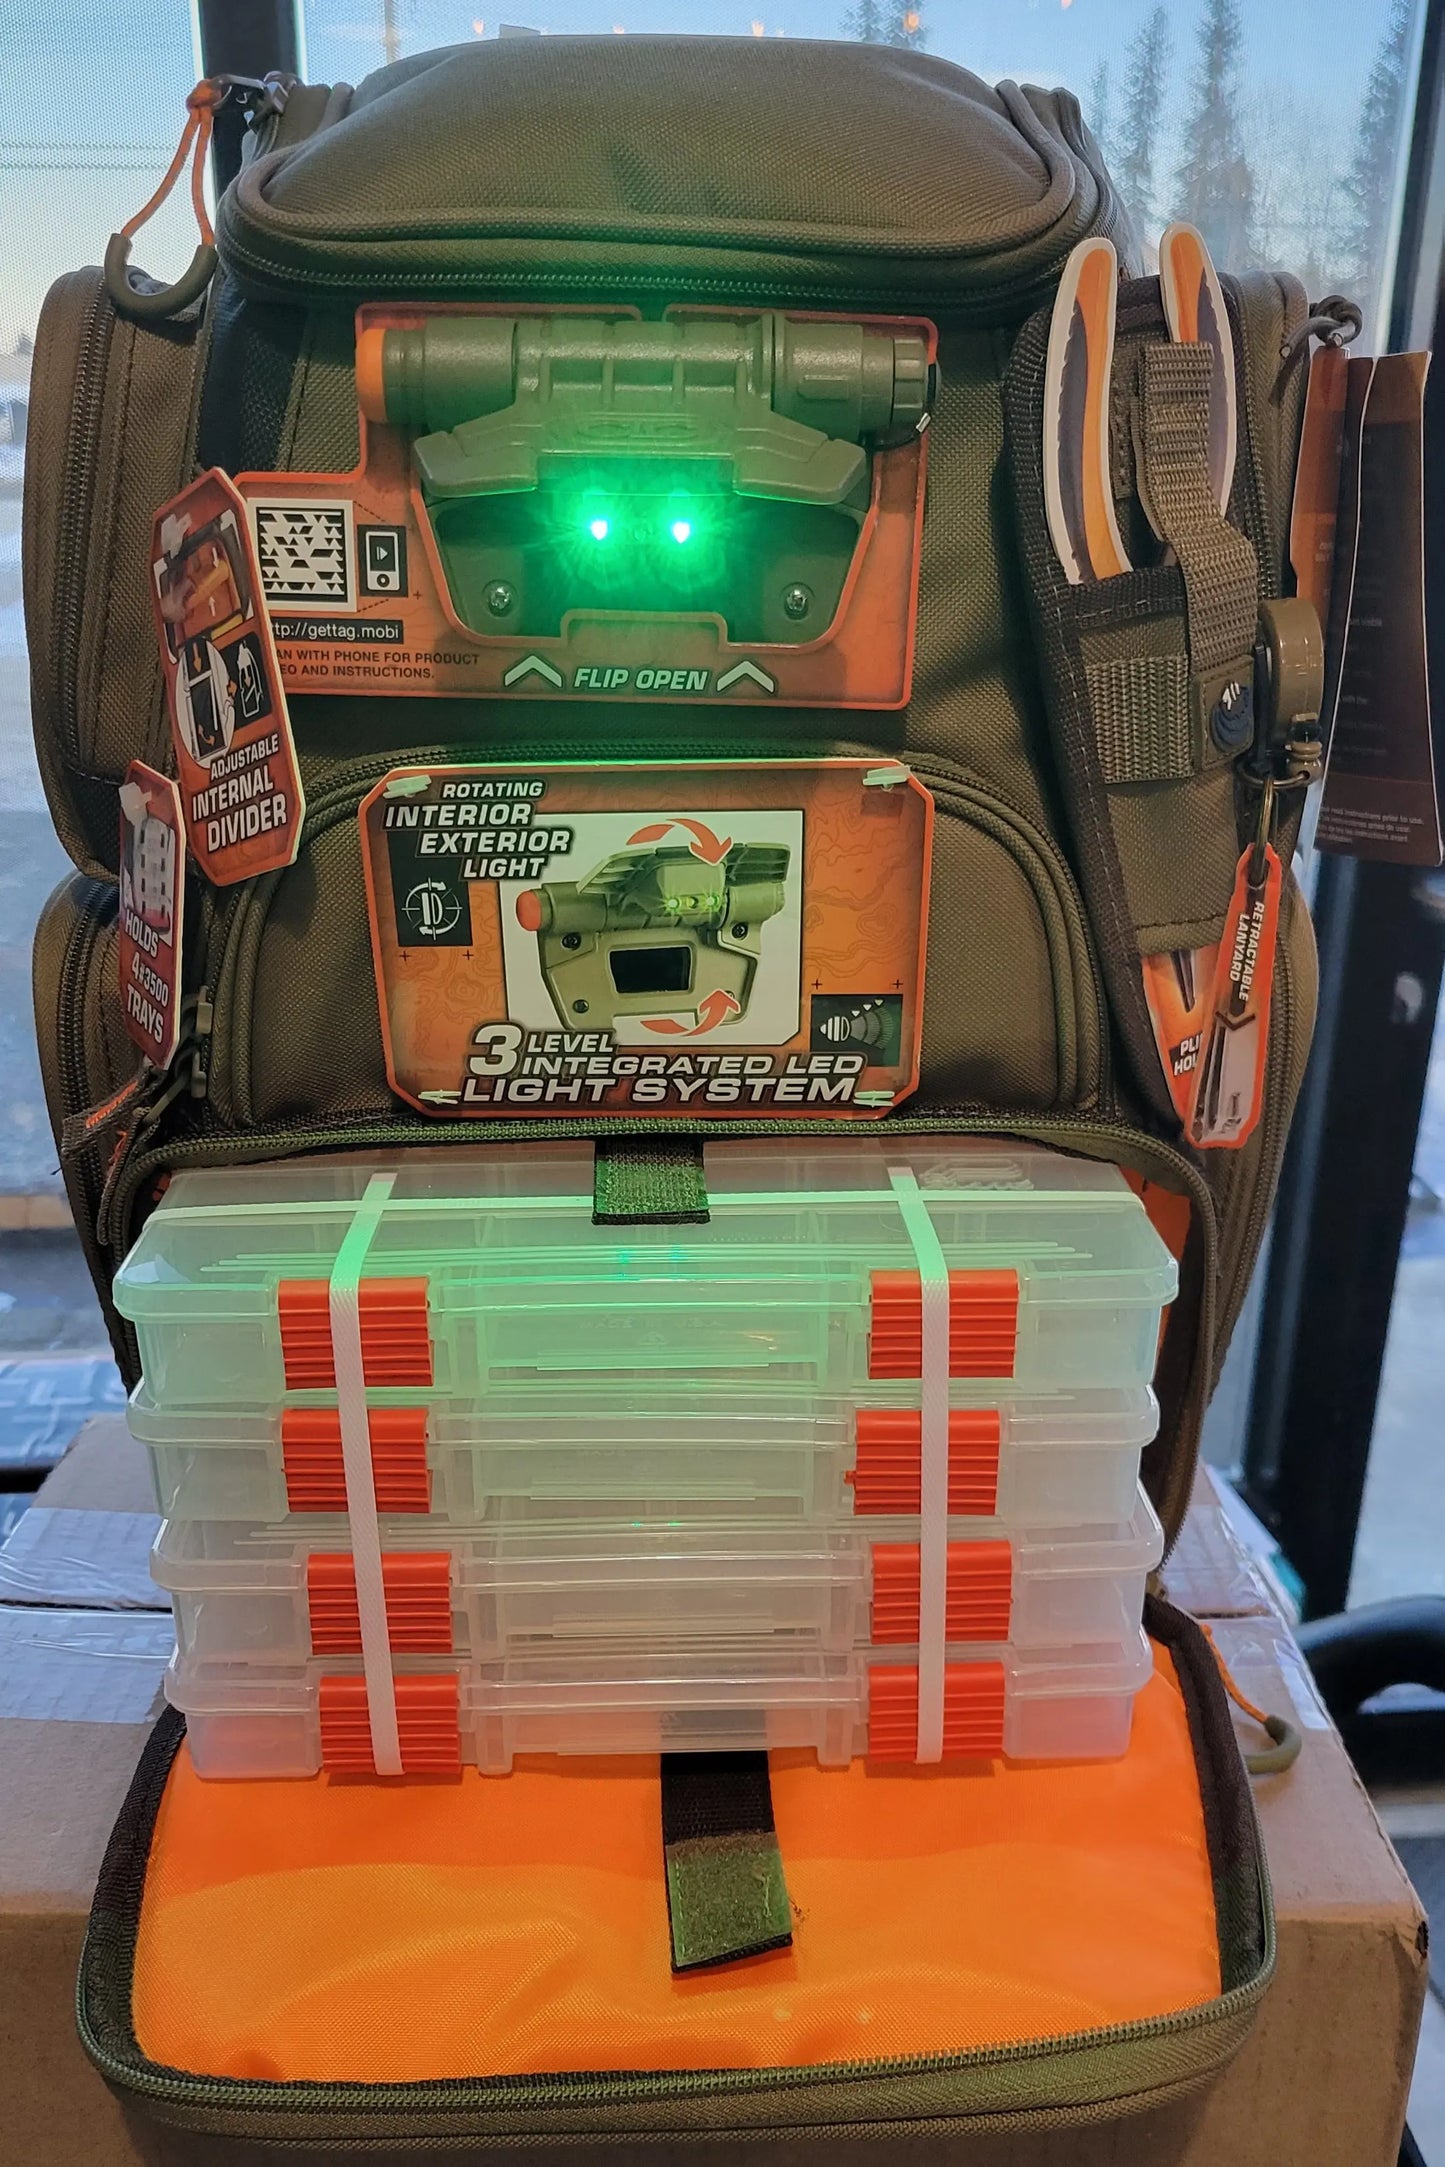 Kuny's Tackle Tek Recon Lighted Compact Backpack Kuny's Leather